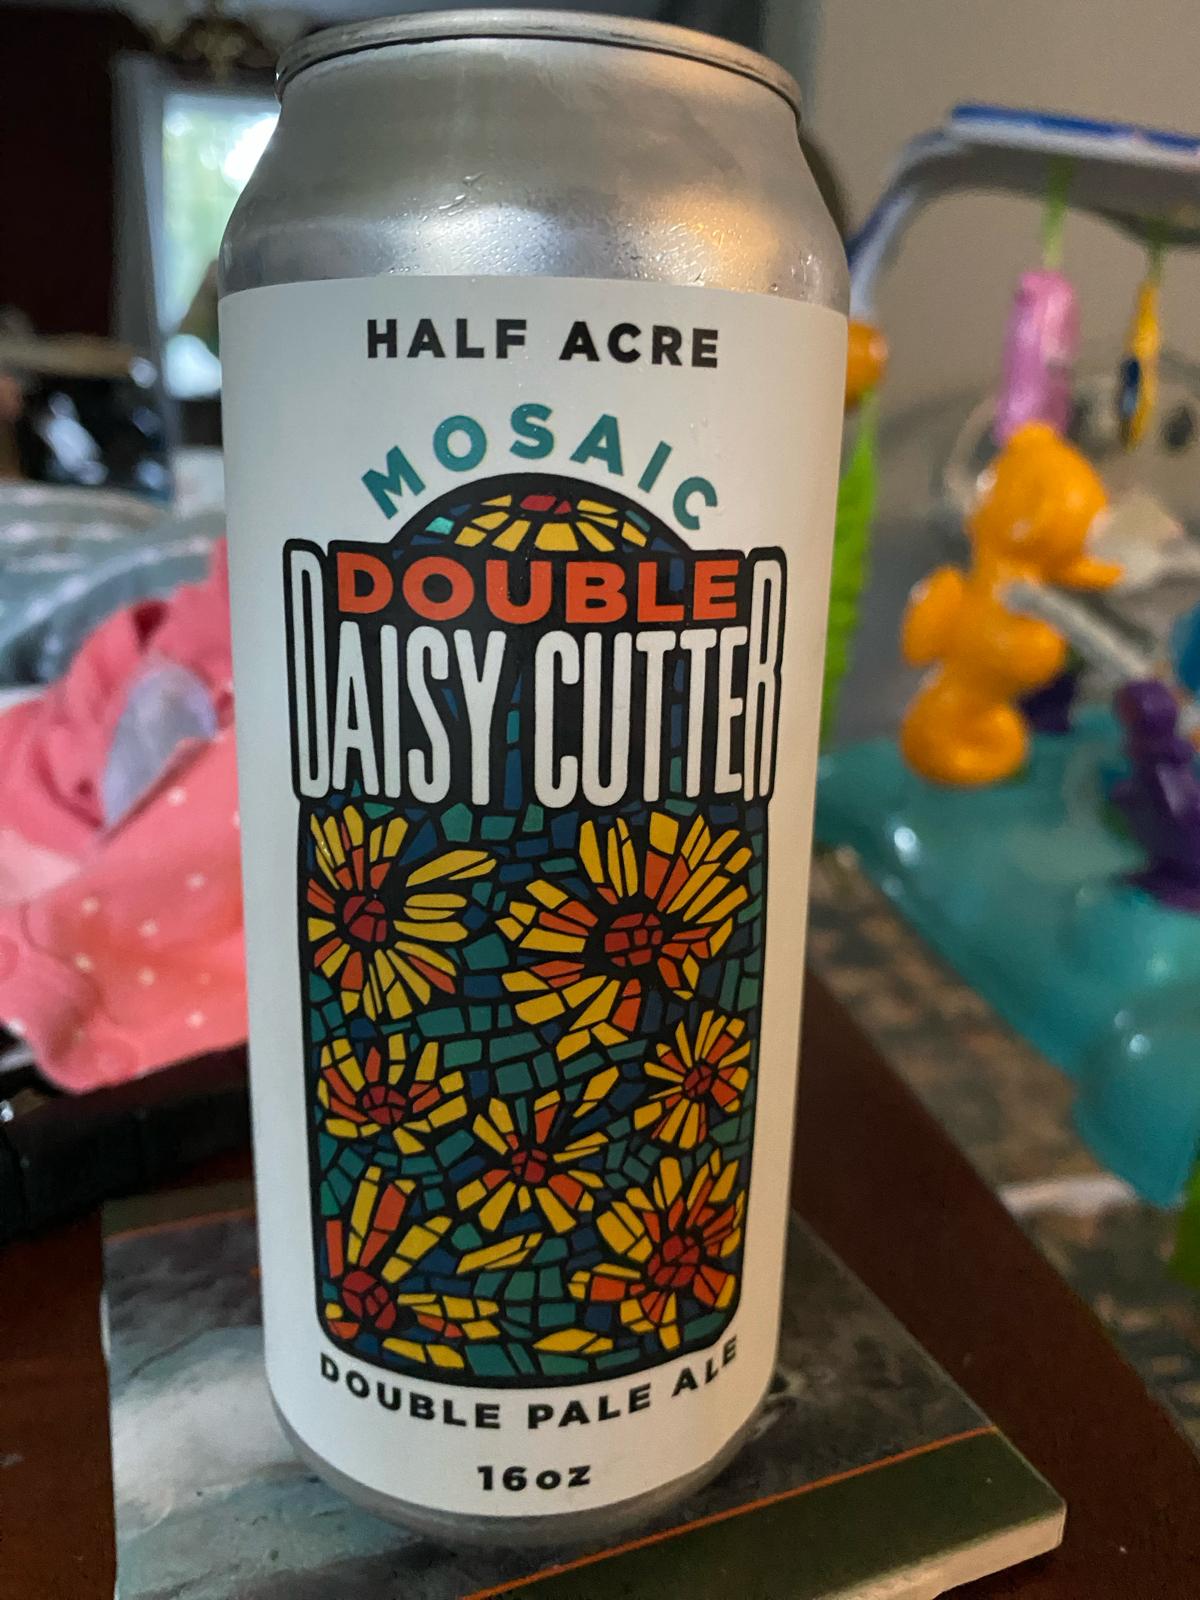 Double Daisy Cutter - Mosaic